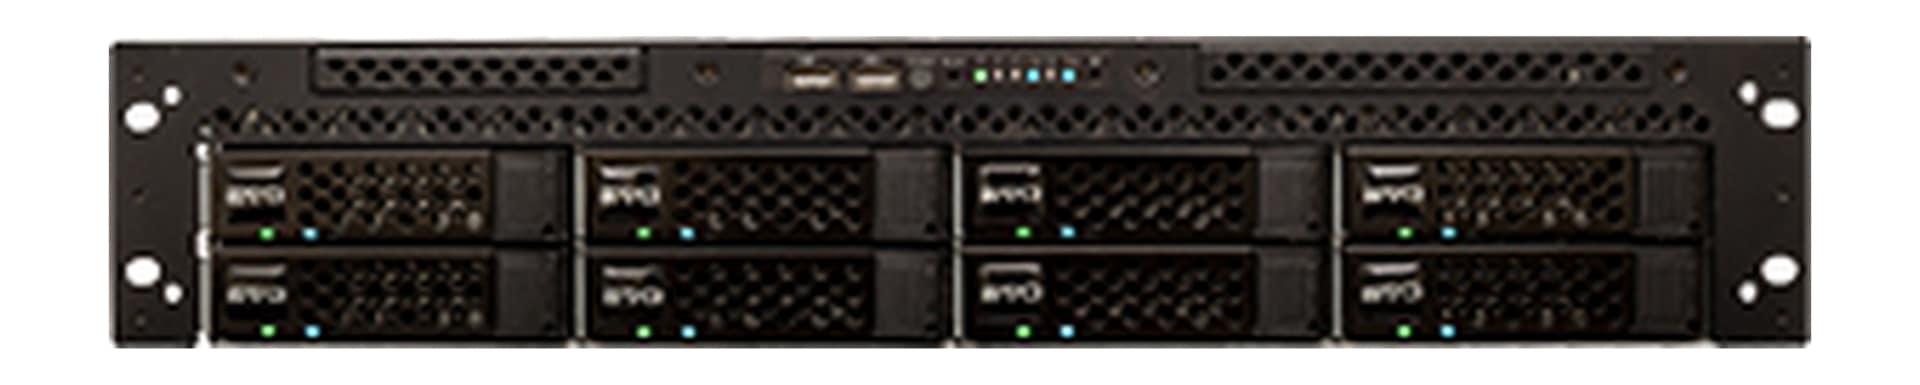 SNS EVO 2U 8 Bay Shared Storage Server with 48TB Raw Capacity Hard Drive